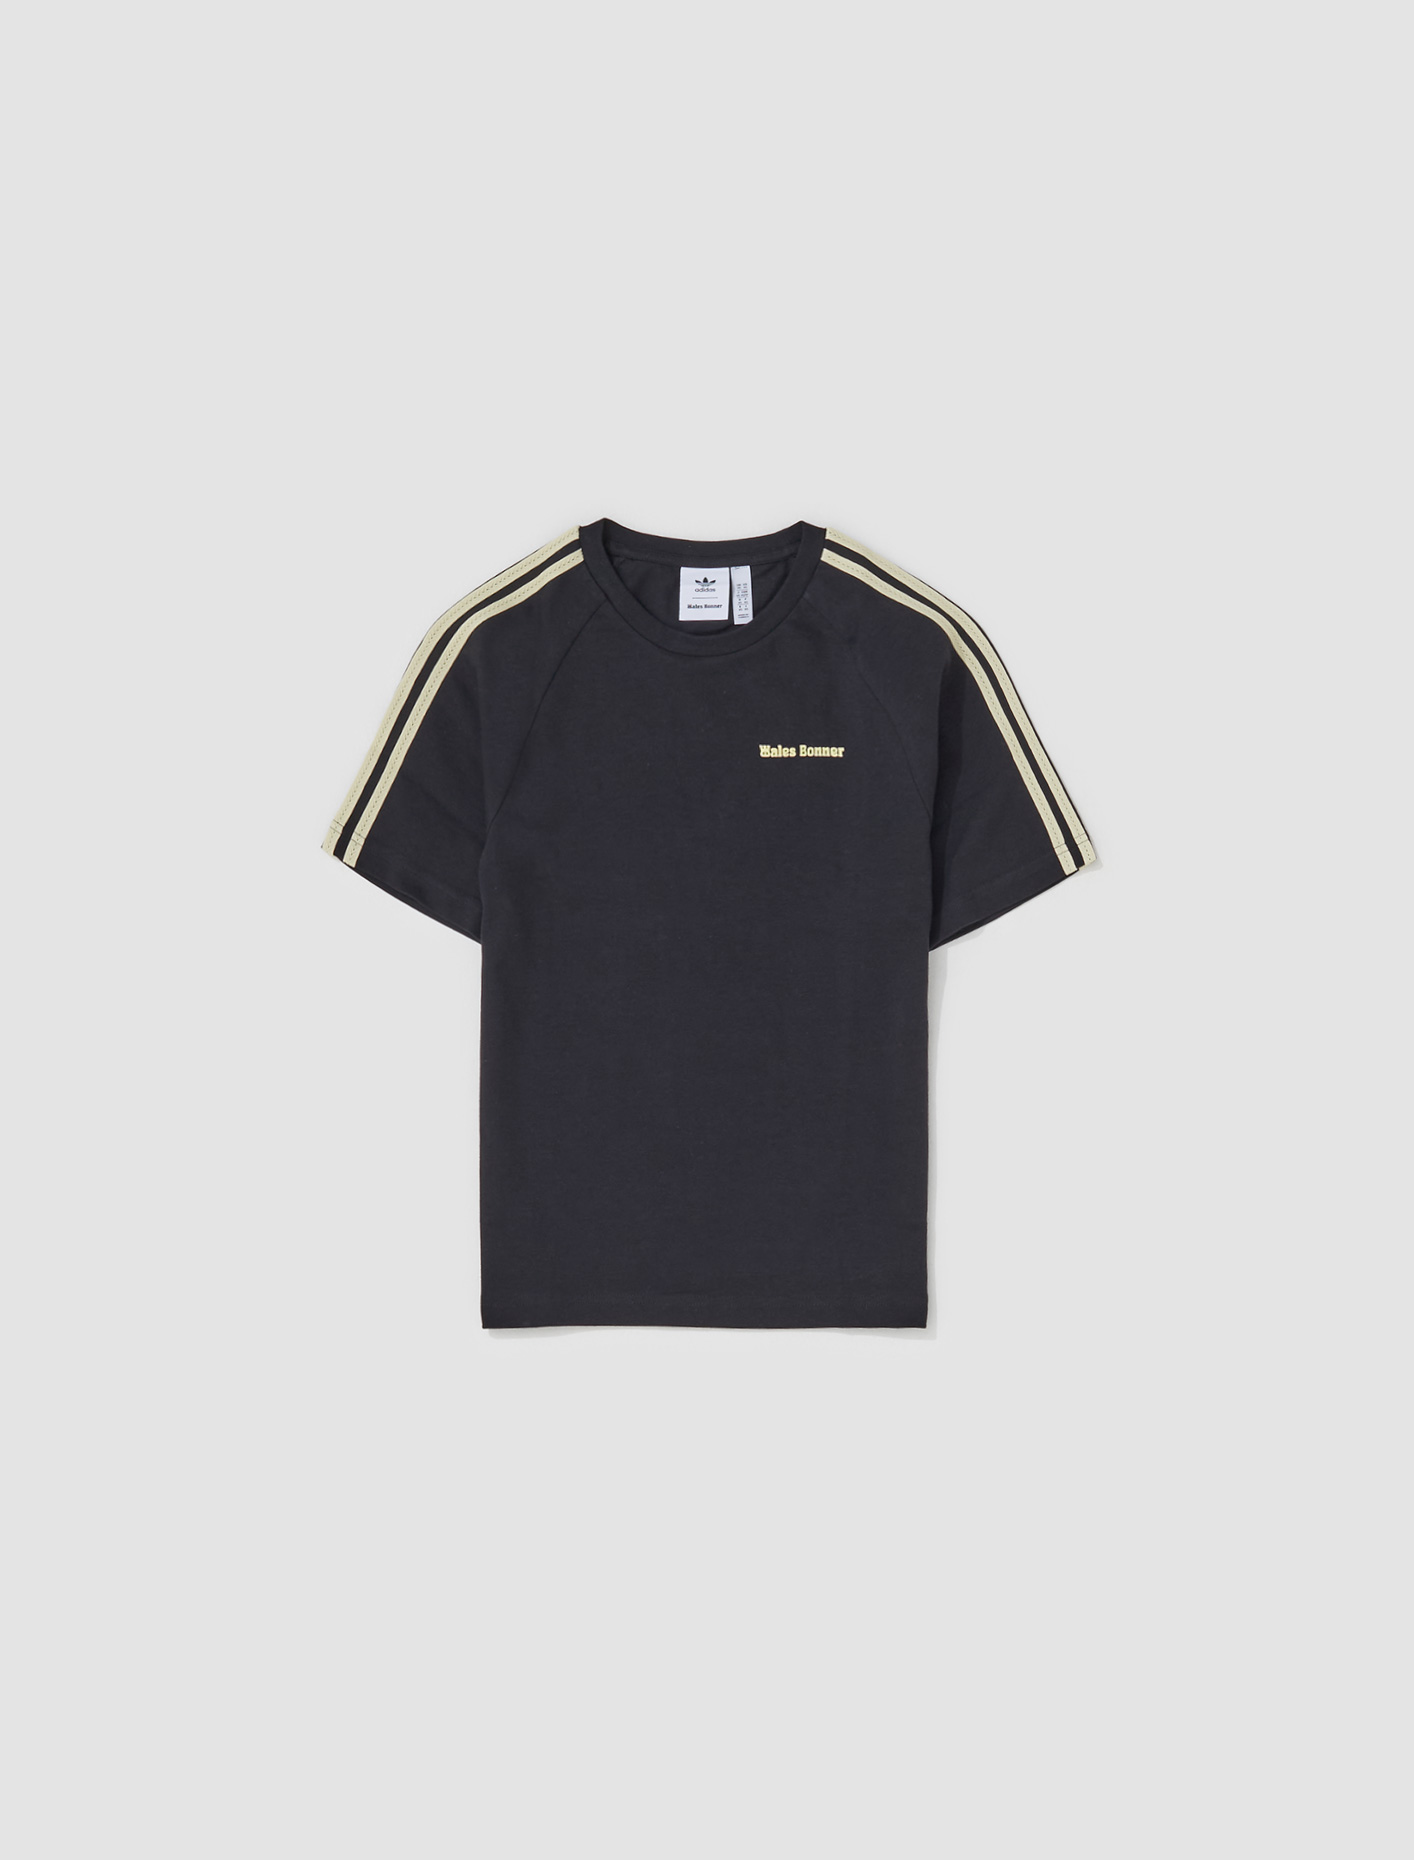 Adidas x Wales Bonner T-Shirt in Black | Voo Store Berlin | Worldwide ...